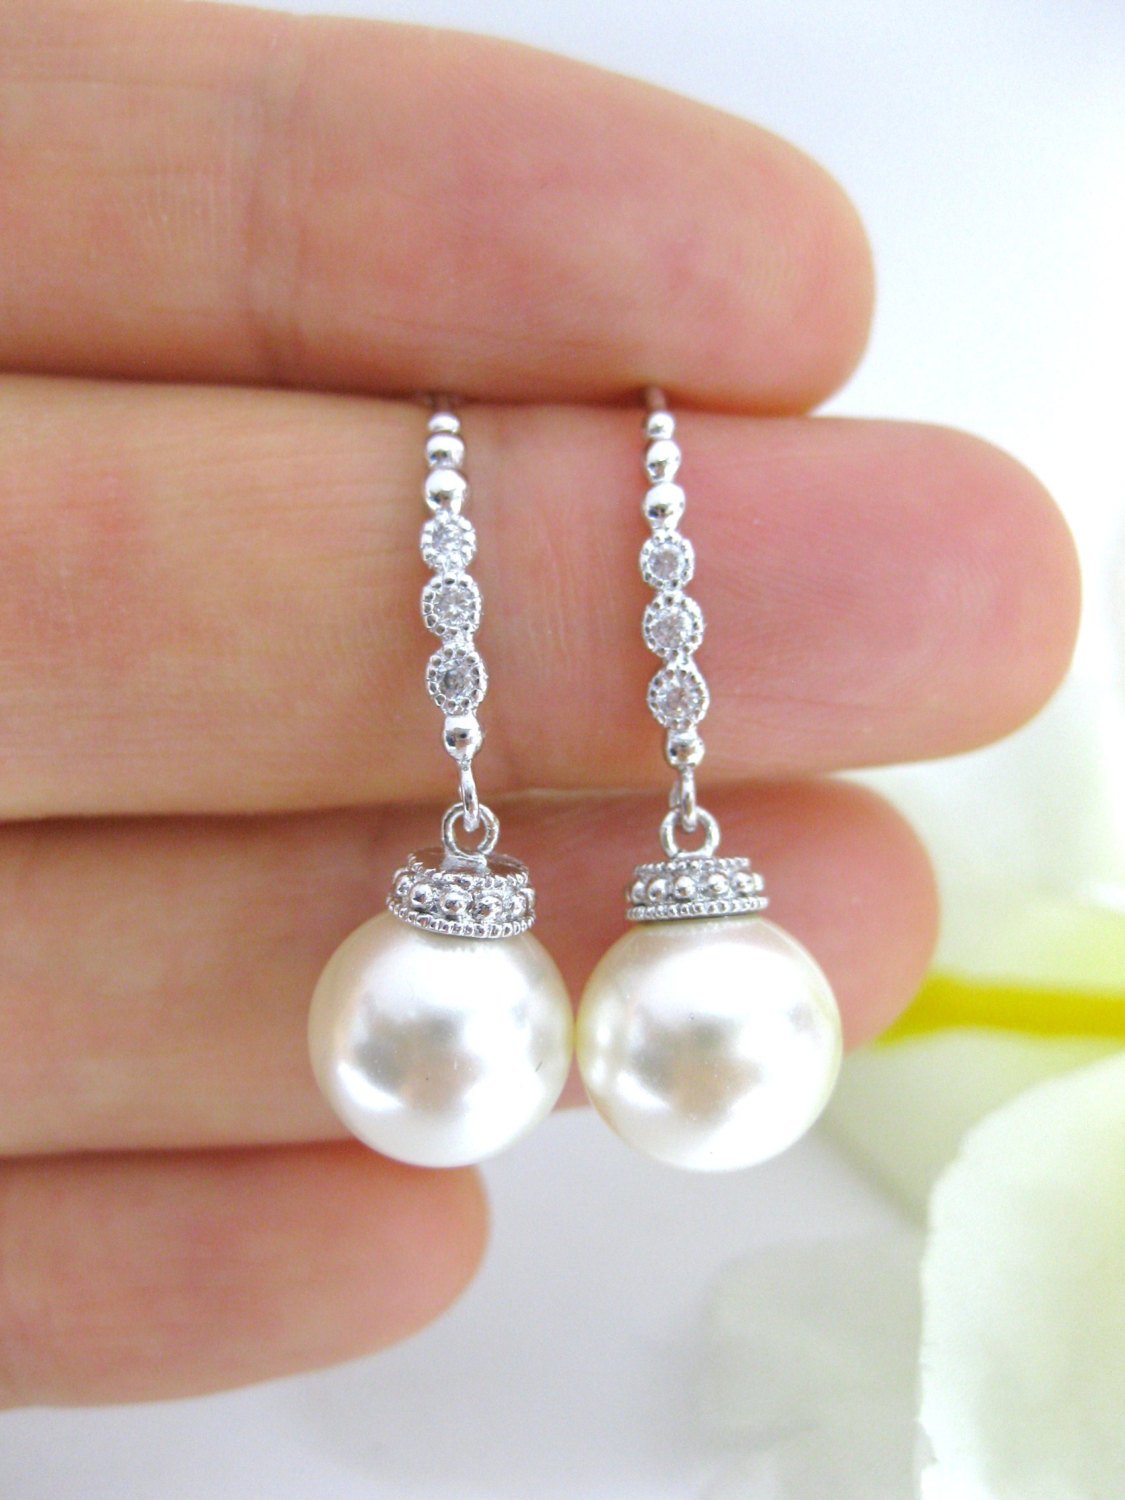 Bridal Pearl Earrings Wedding Jewelry Swarovski 10mm Round Pearl Earrings Bridesmaid Gift Silver Earrings (e132)